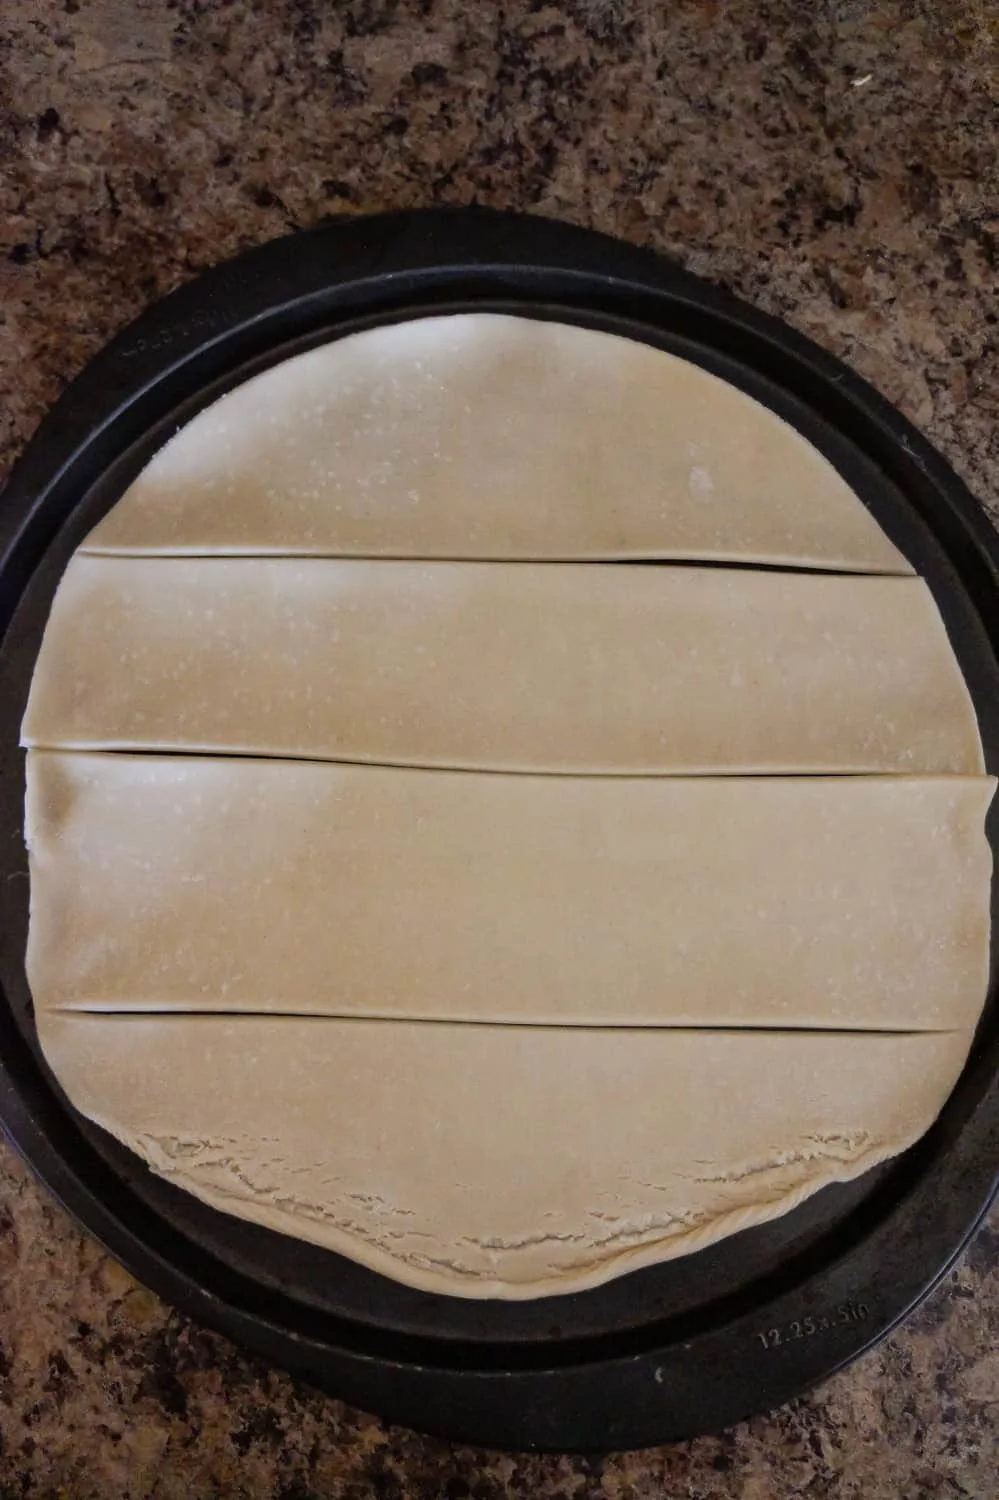 Pillsbury pie crust dough cut into four wide strips